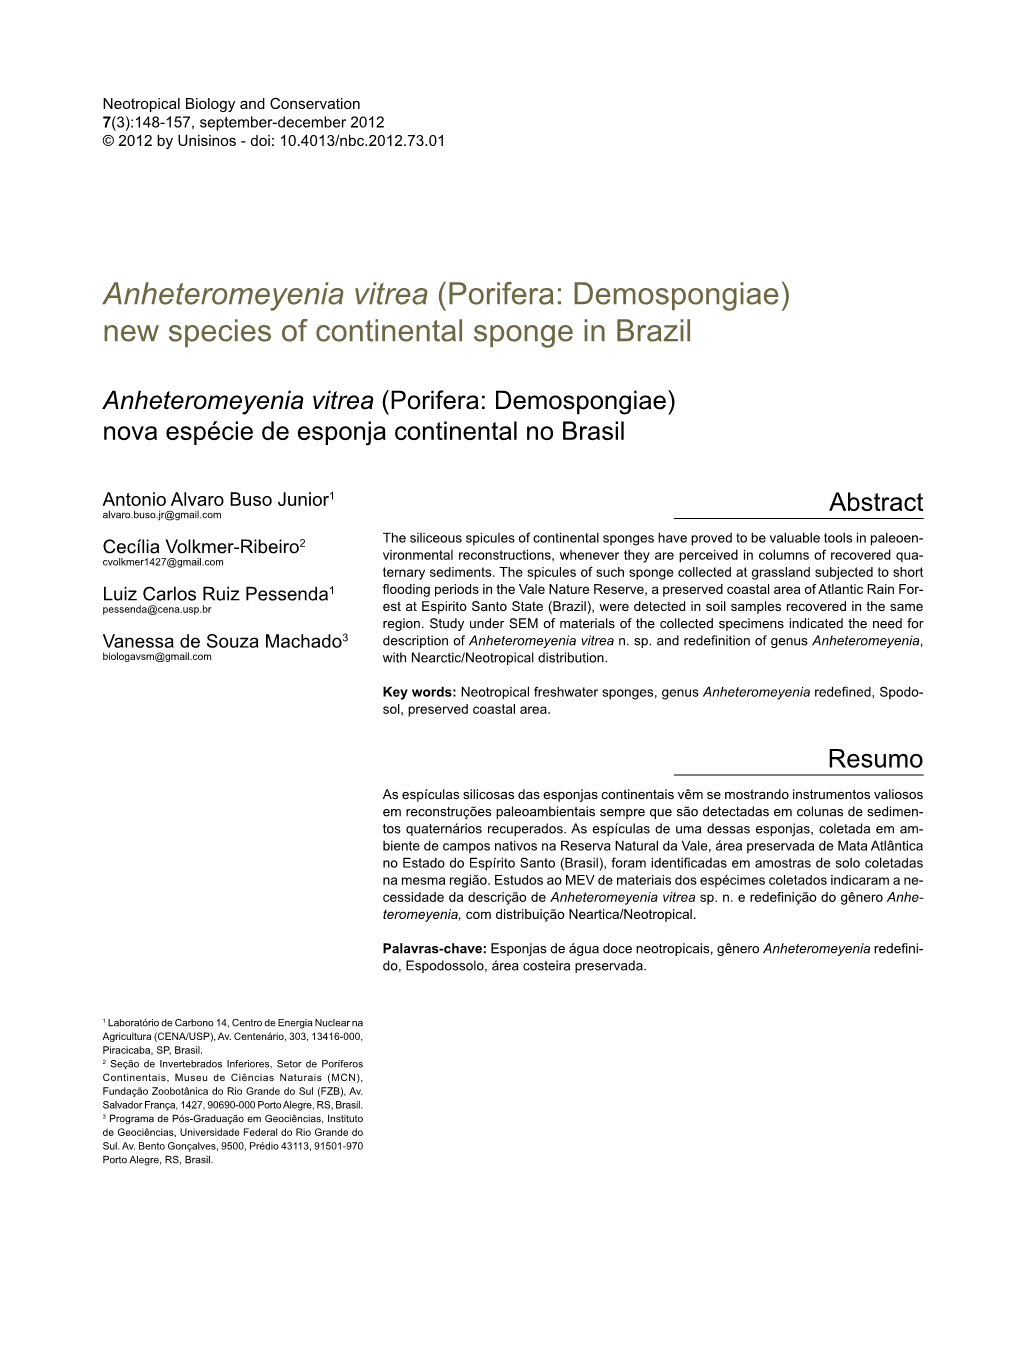 Anheteromeyenia Vitrea (Porifera: Demospongiae) New Species of Continental Sponge in Brazil